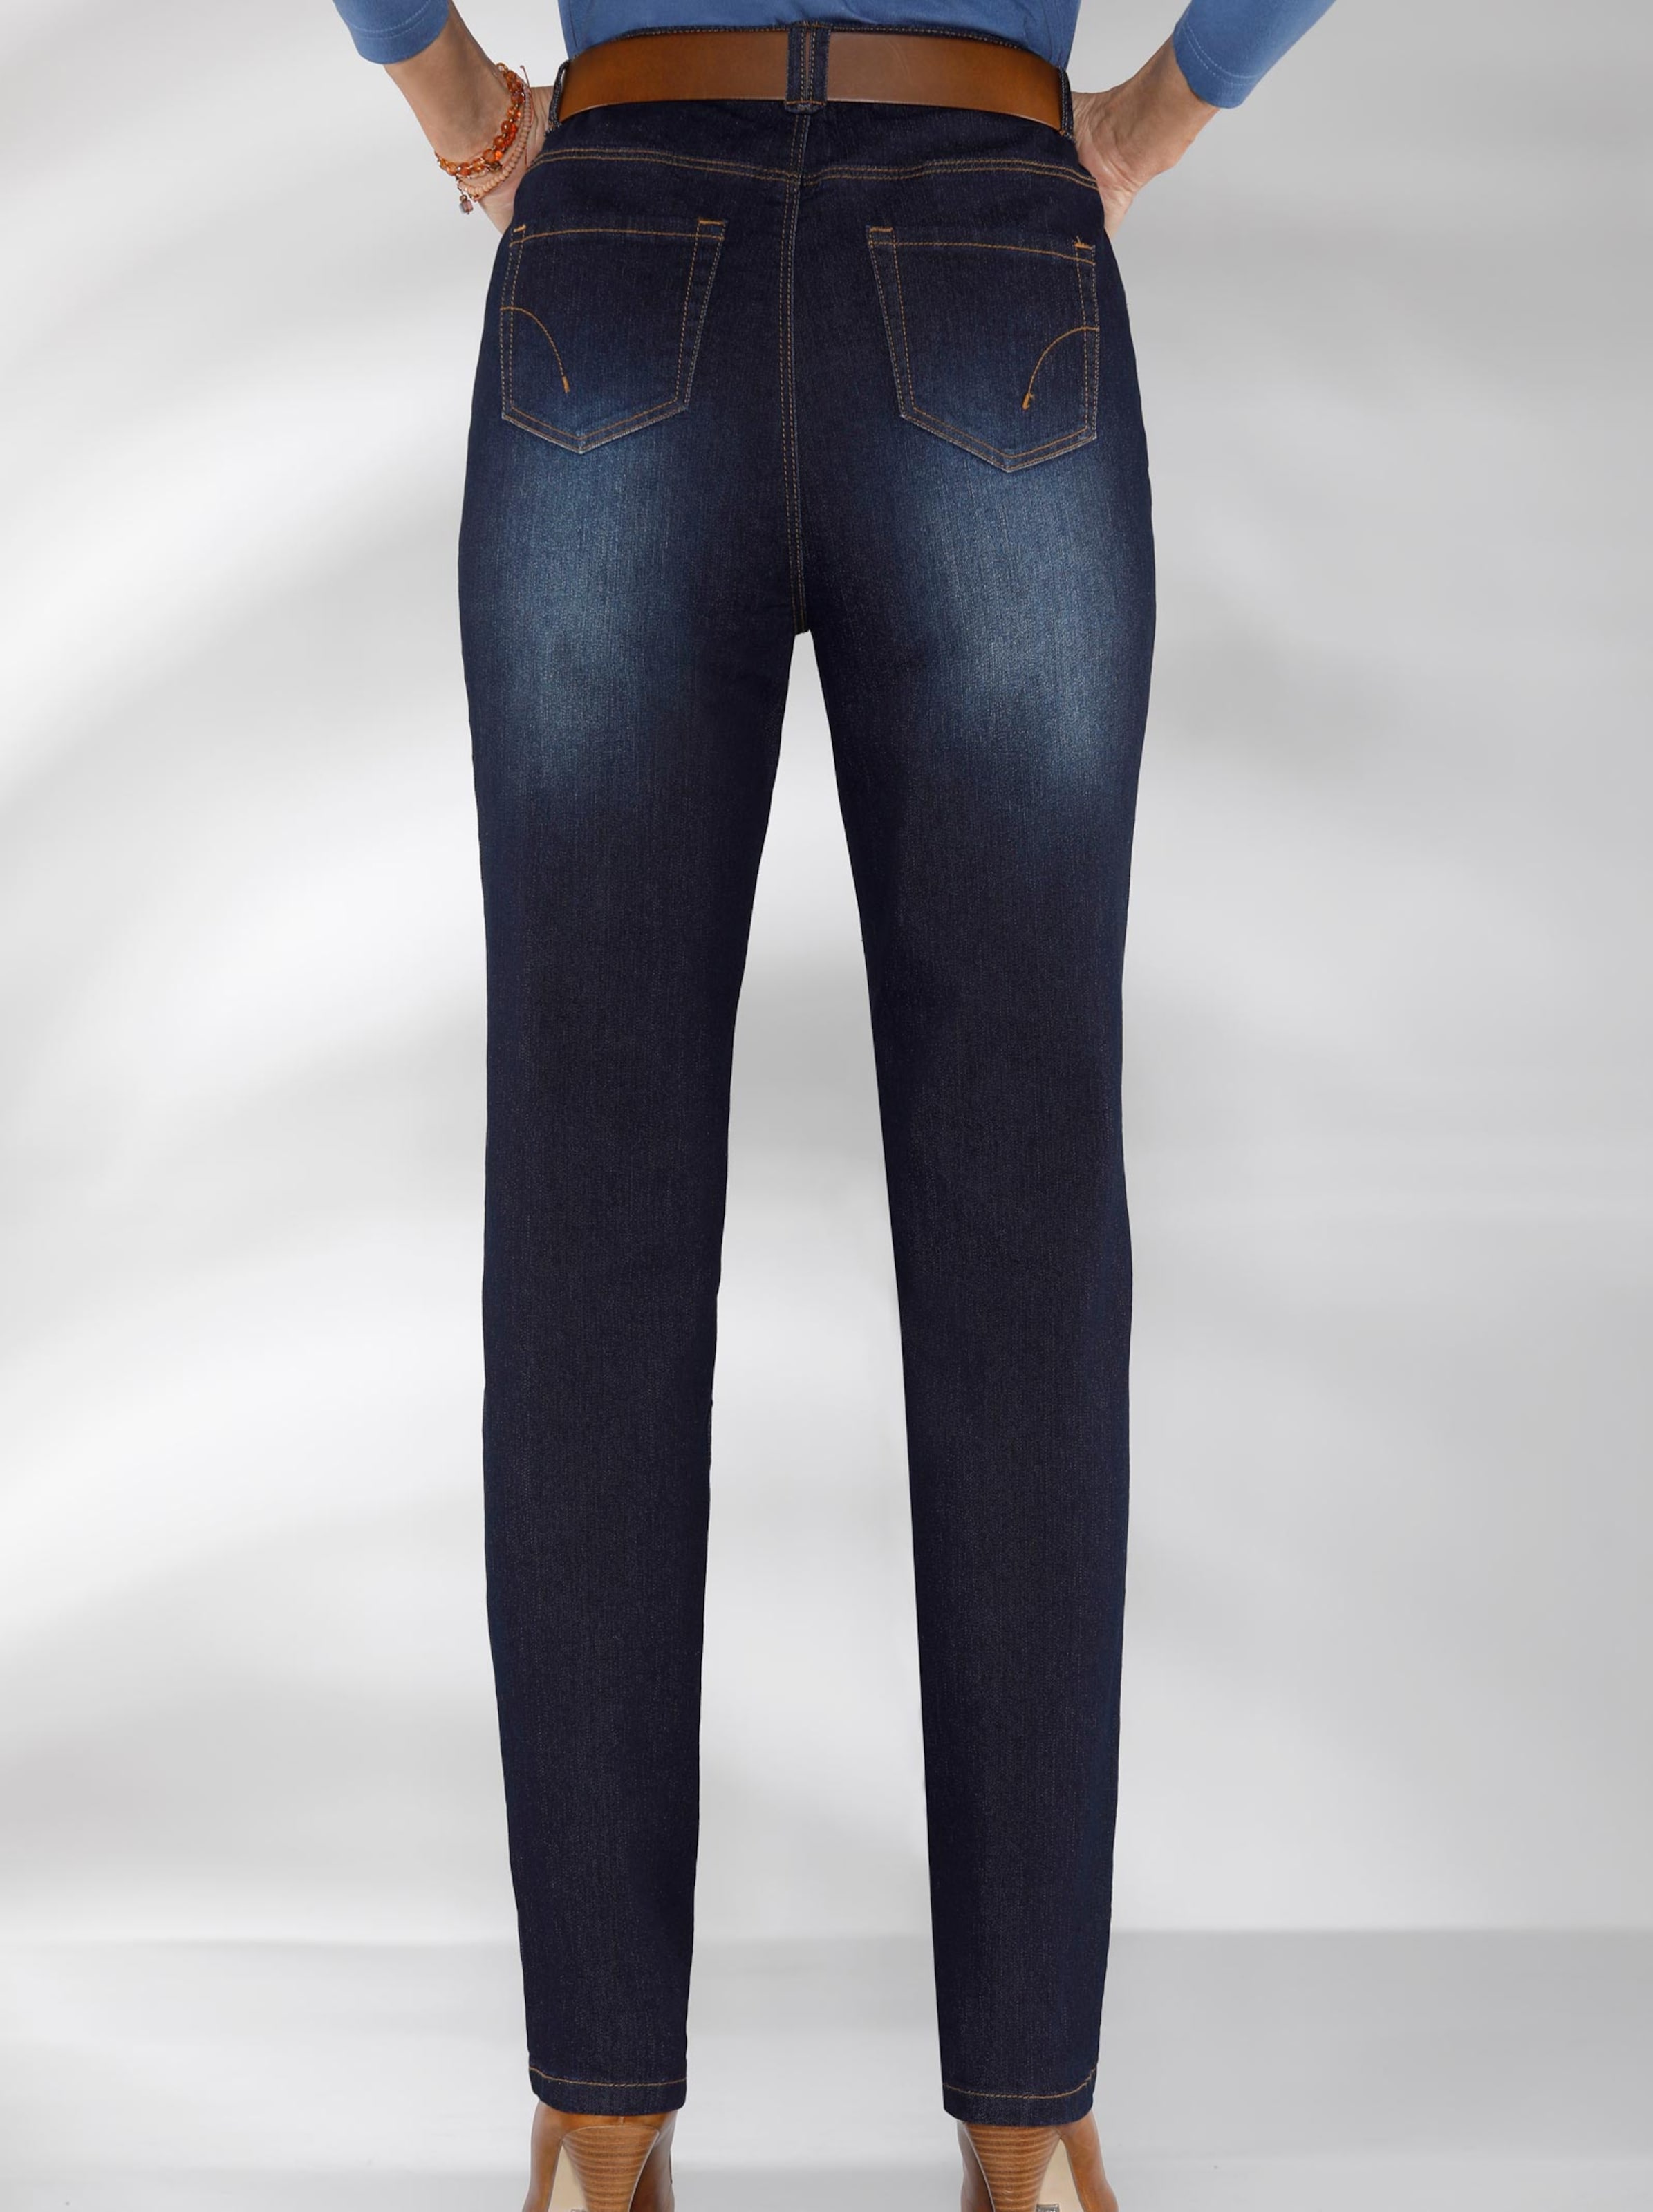 Damenmode Basics 5-Pocket-Jeans in dark blue 